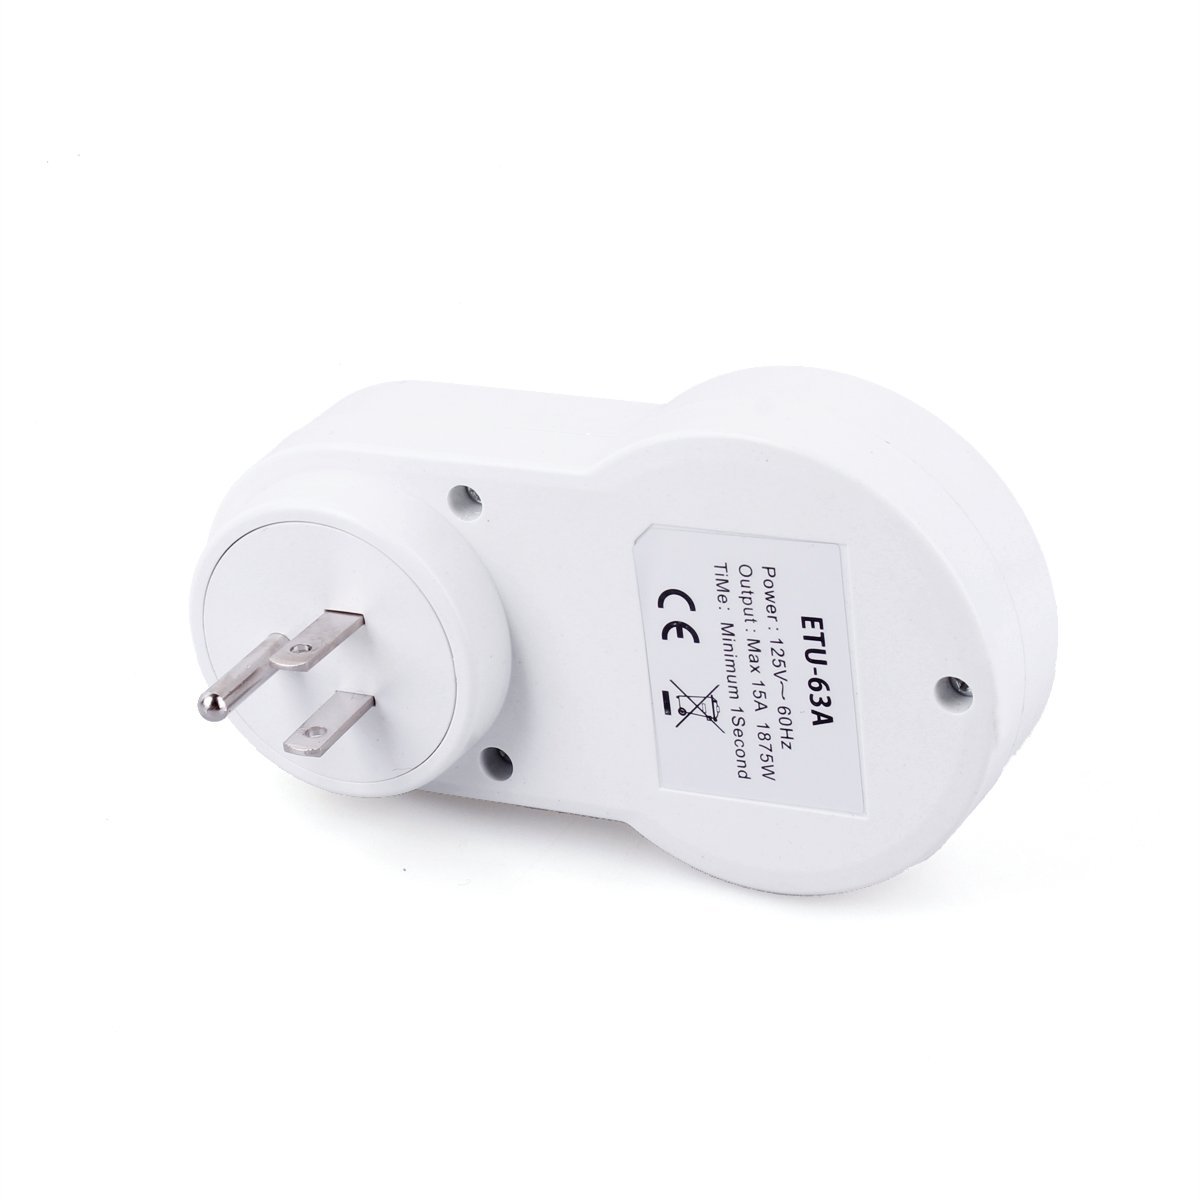 Digital-Programmable-Electronic-Energy-Saving-Timer-Socket-US-Plug-1102016-3